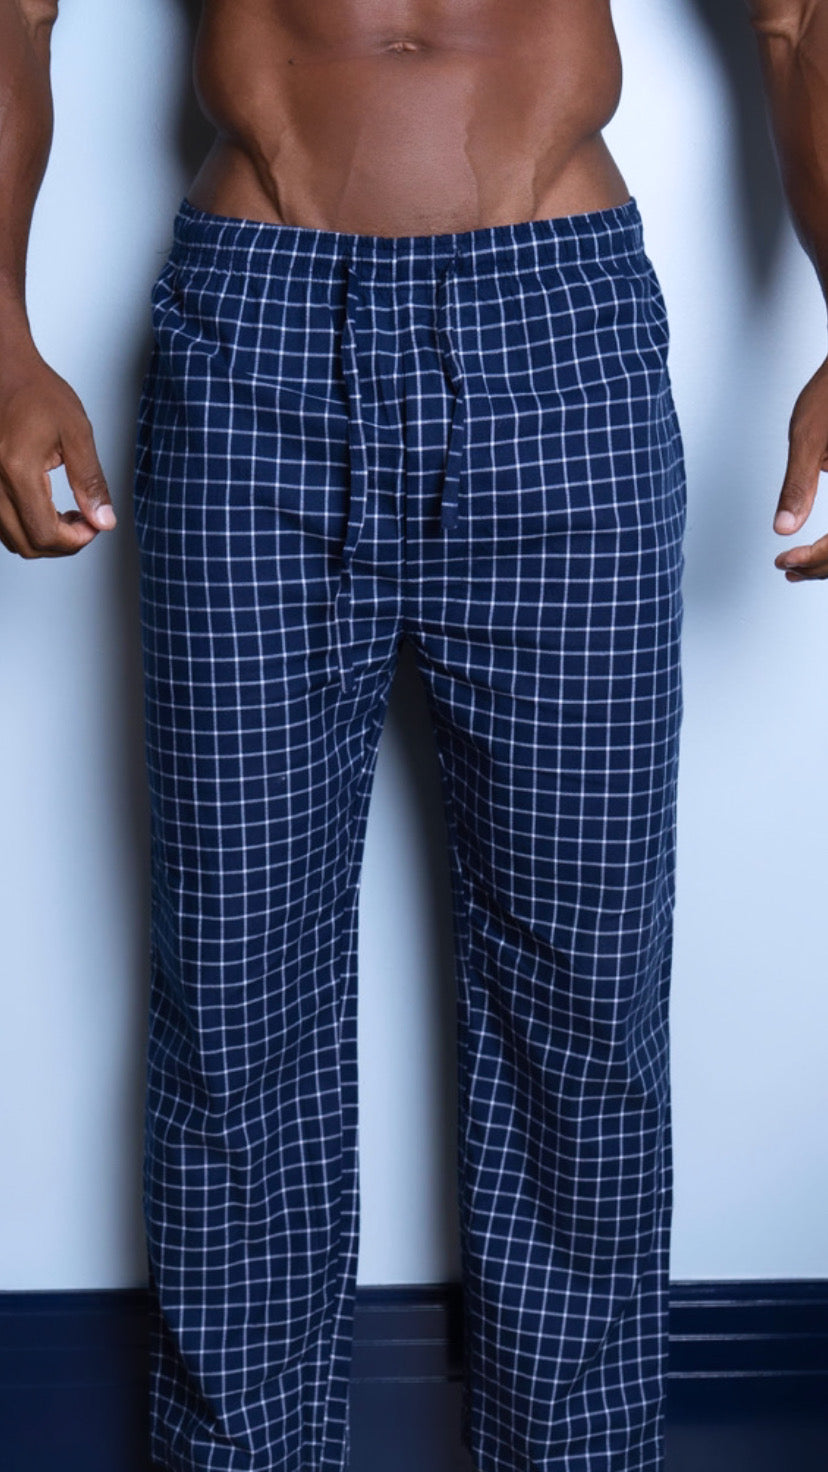 Blue Checkered Pajama Pants